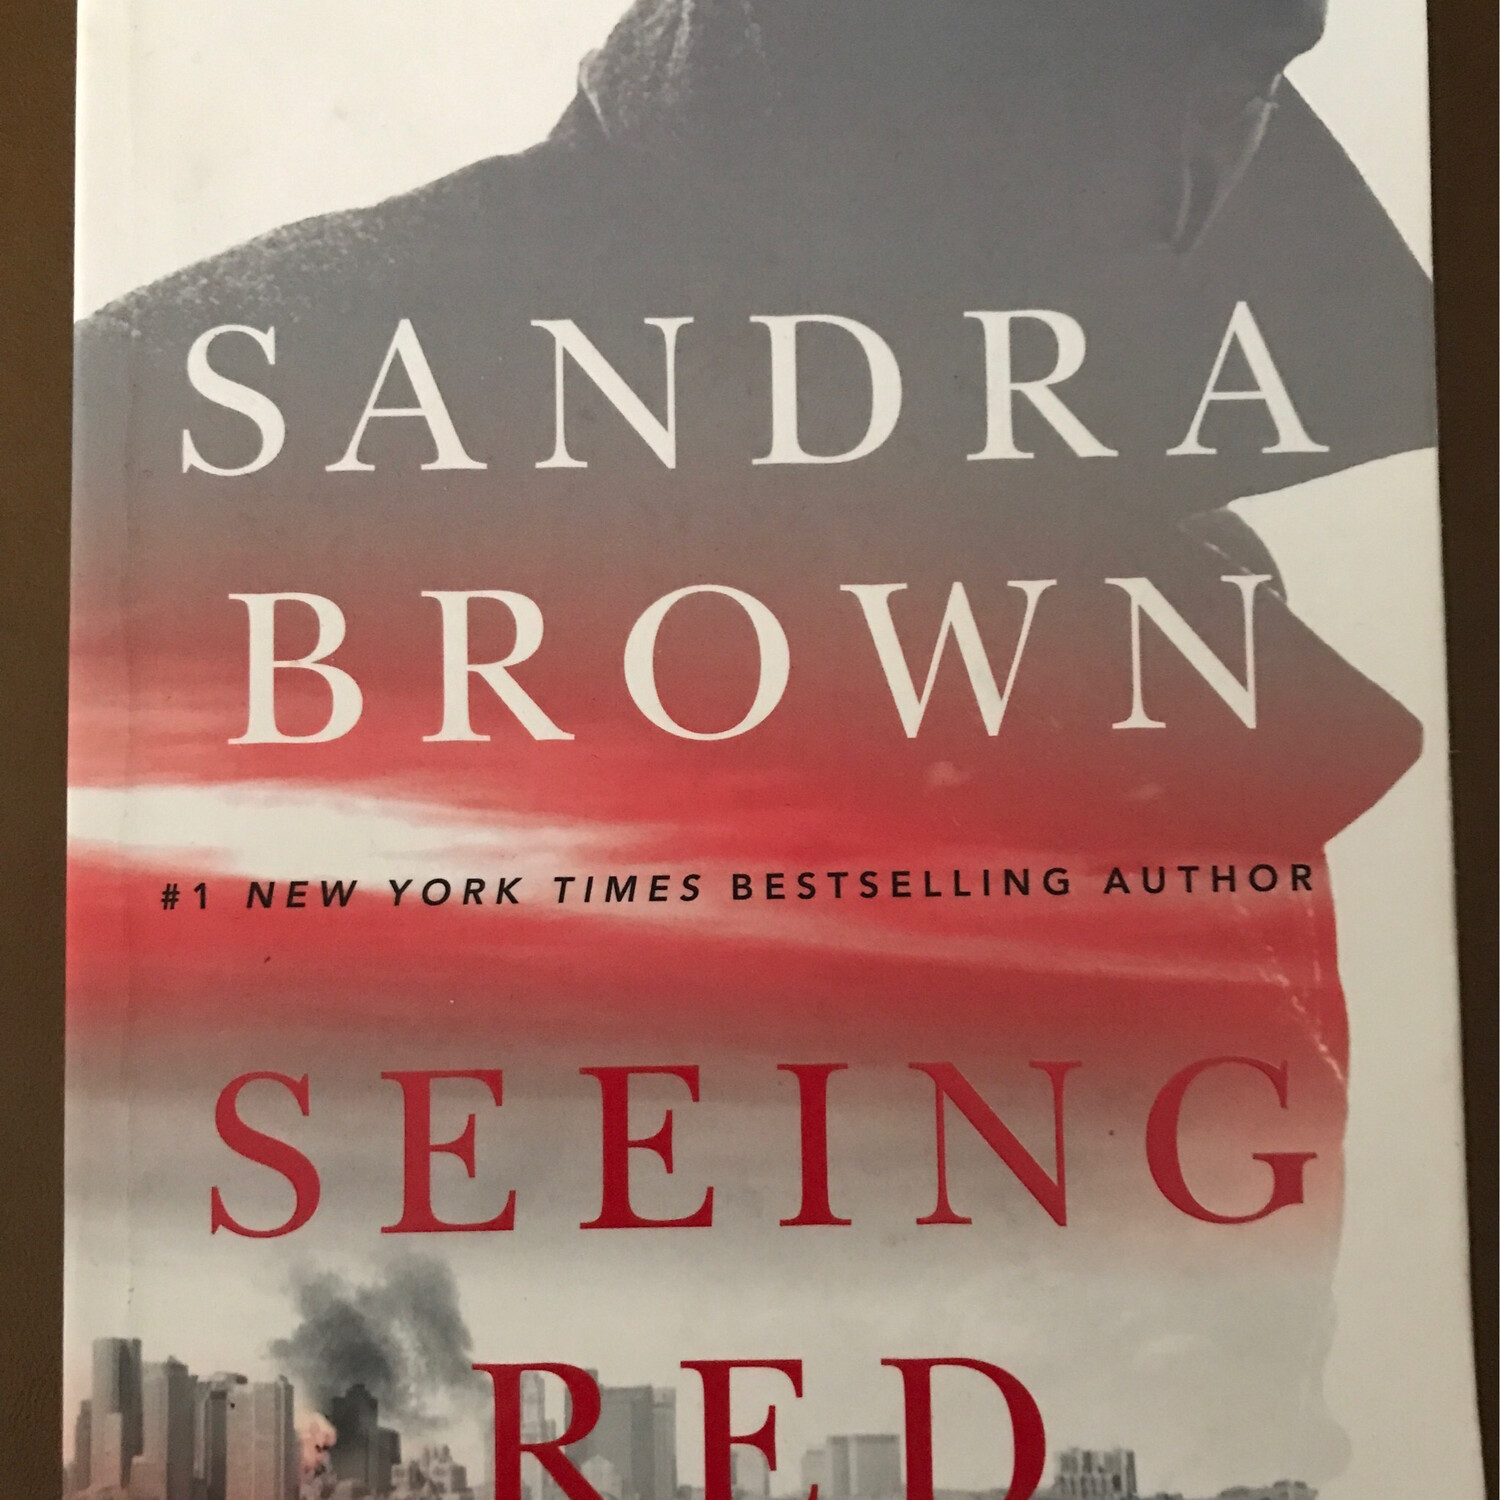 Seeing Red, Sandra Brown